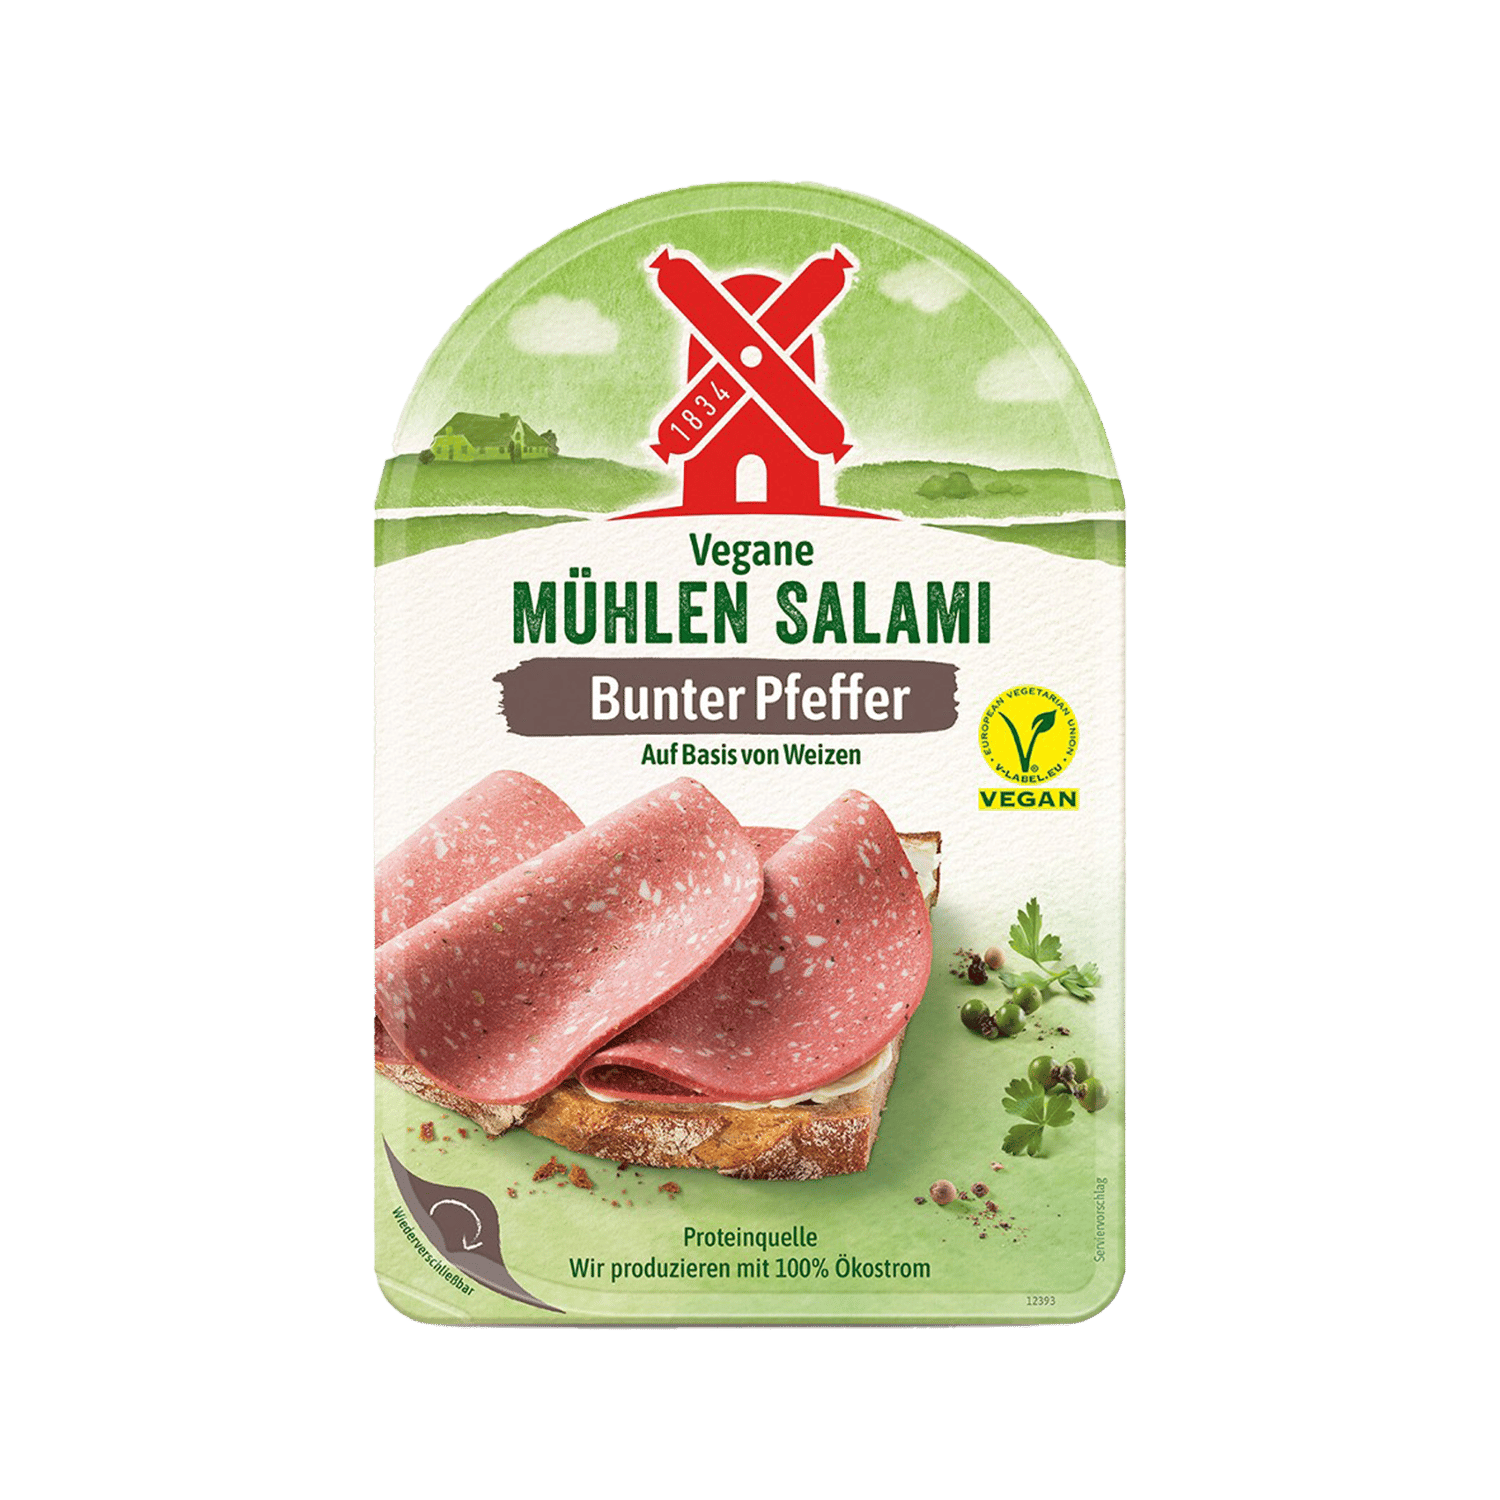 Vegane Mühlen Salami Bunter Pfeffer, 80g